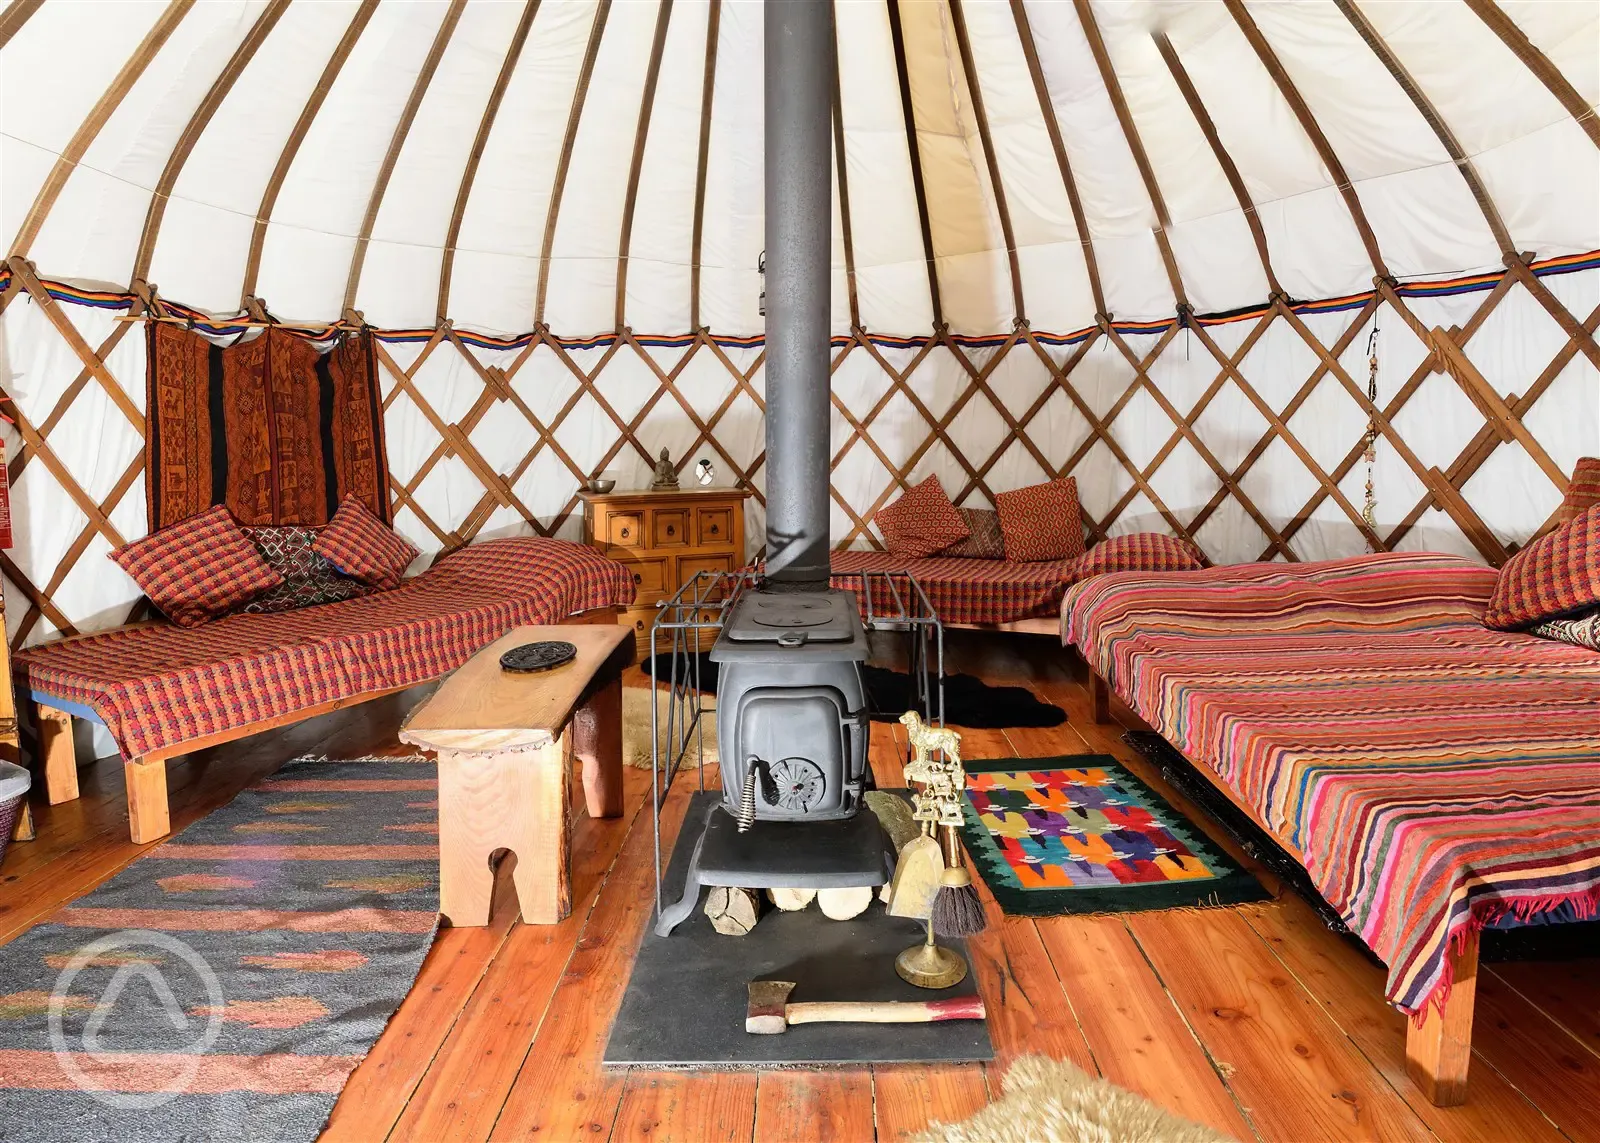 Inside the Bentwood Yurt